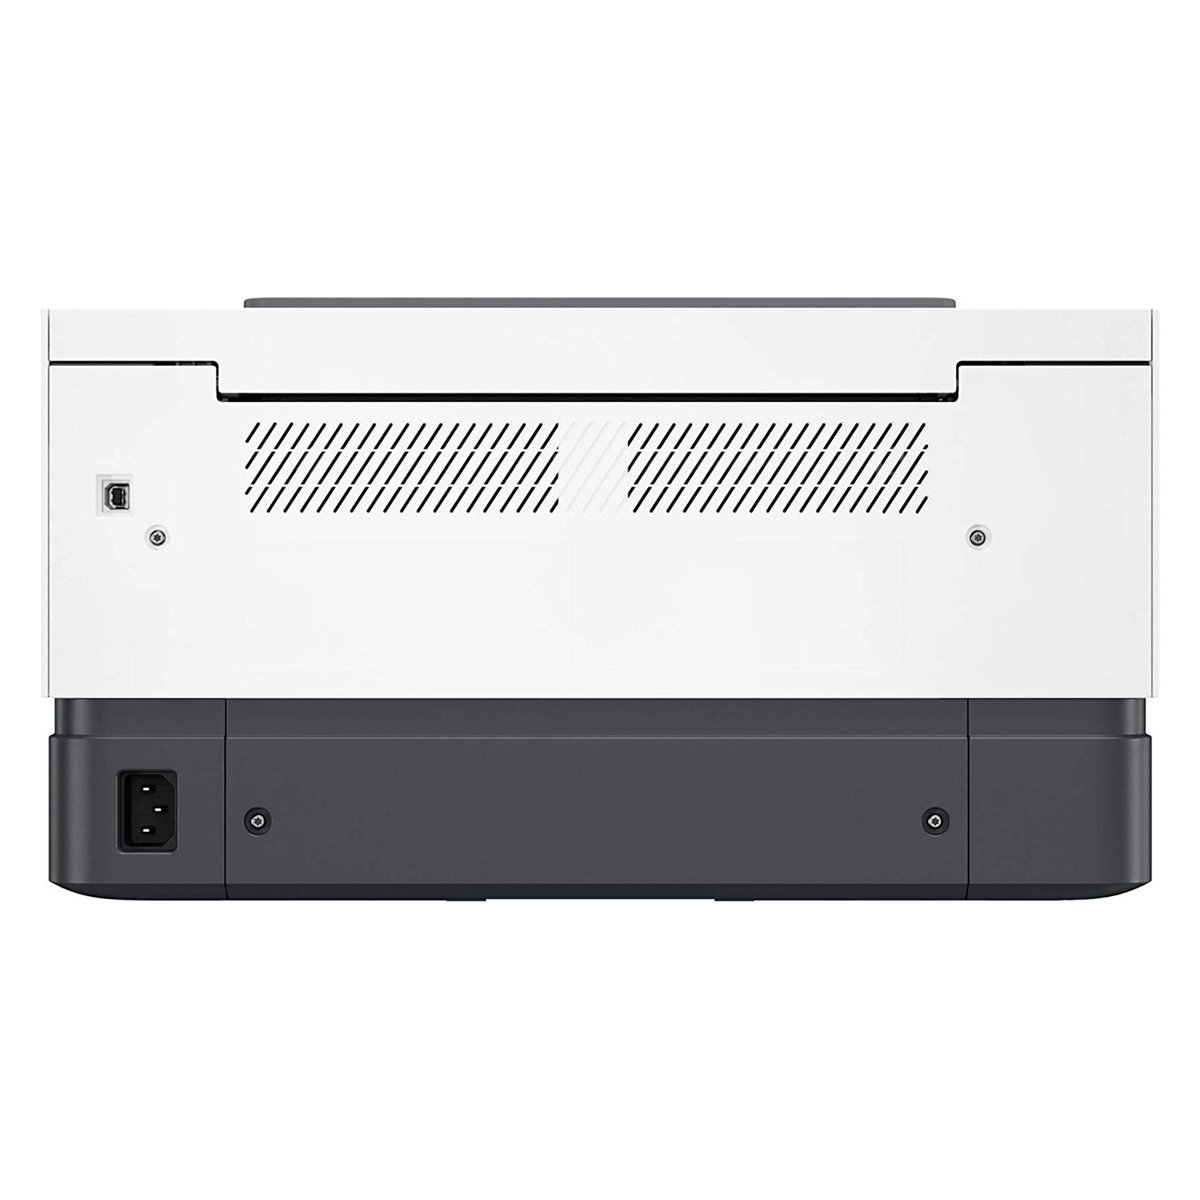 HP Neverstop Laser 1000w Printer (4RY23A),White